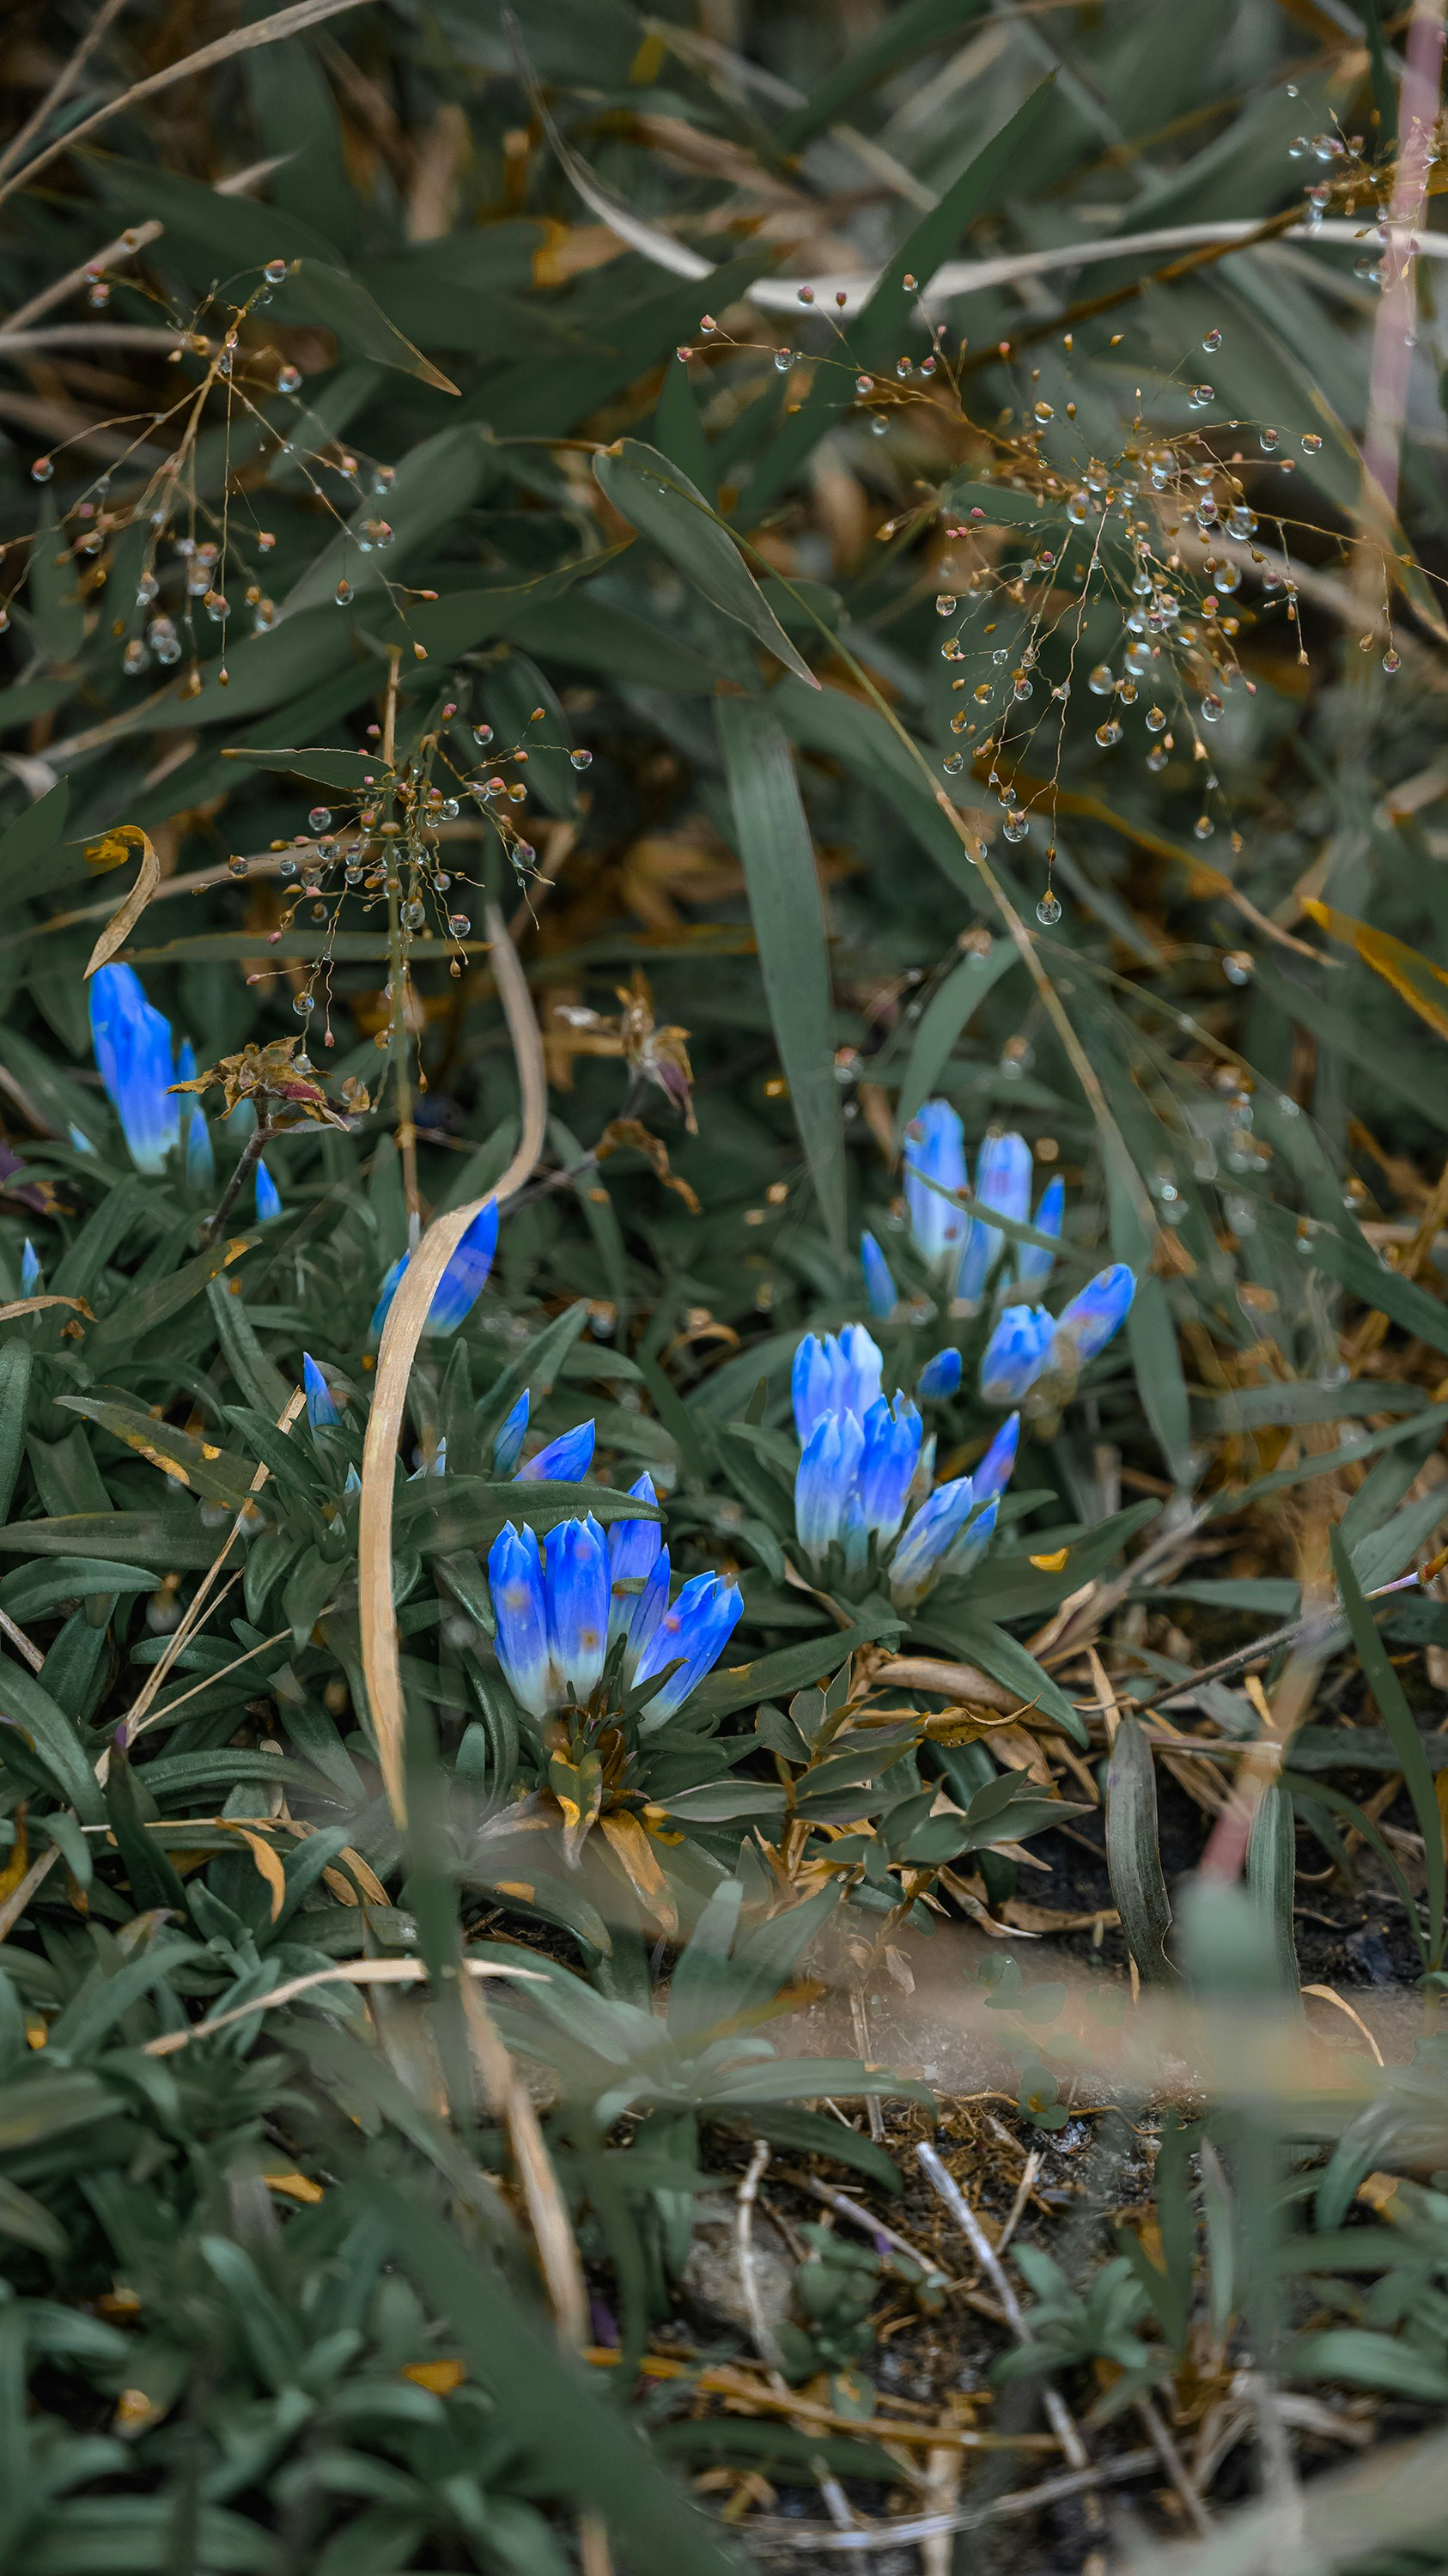 blue crocus flowers in bloom during daytime